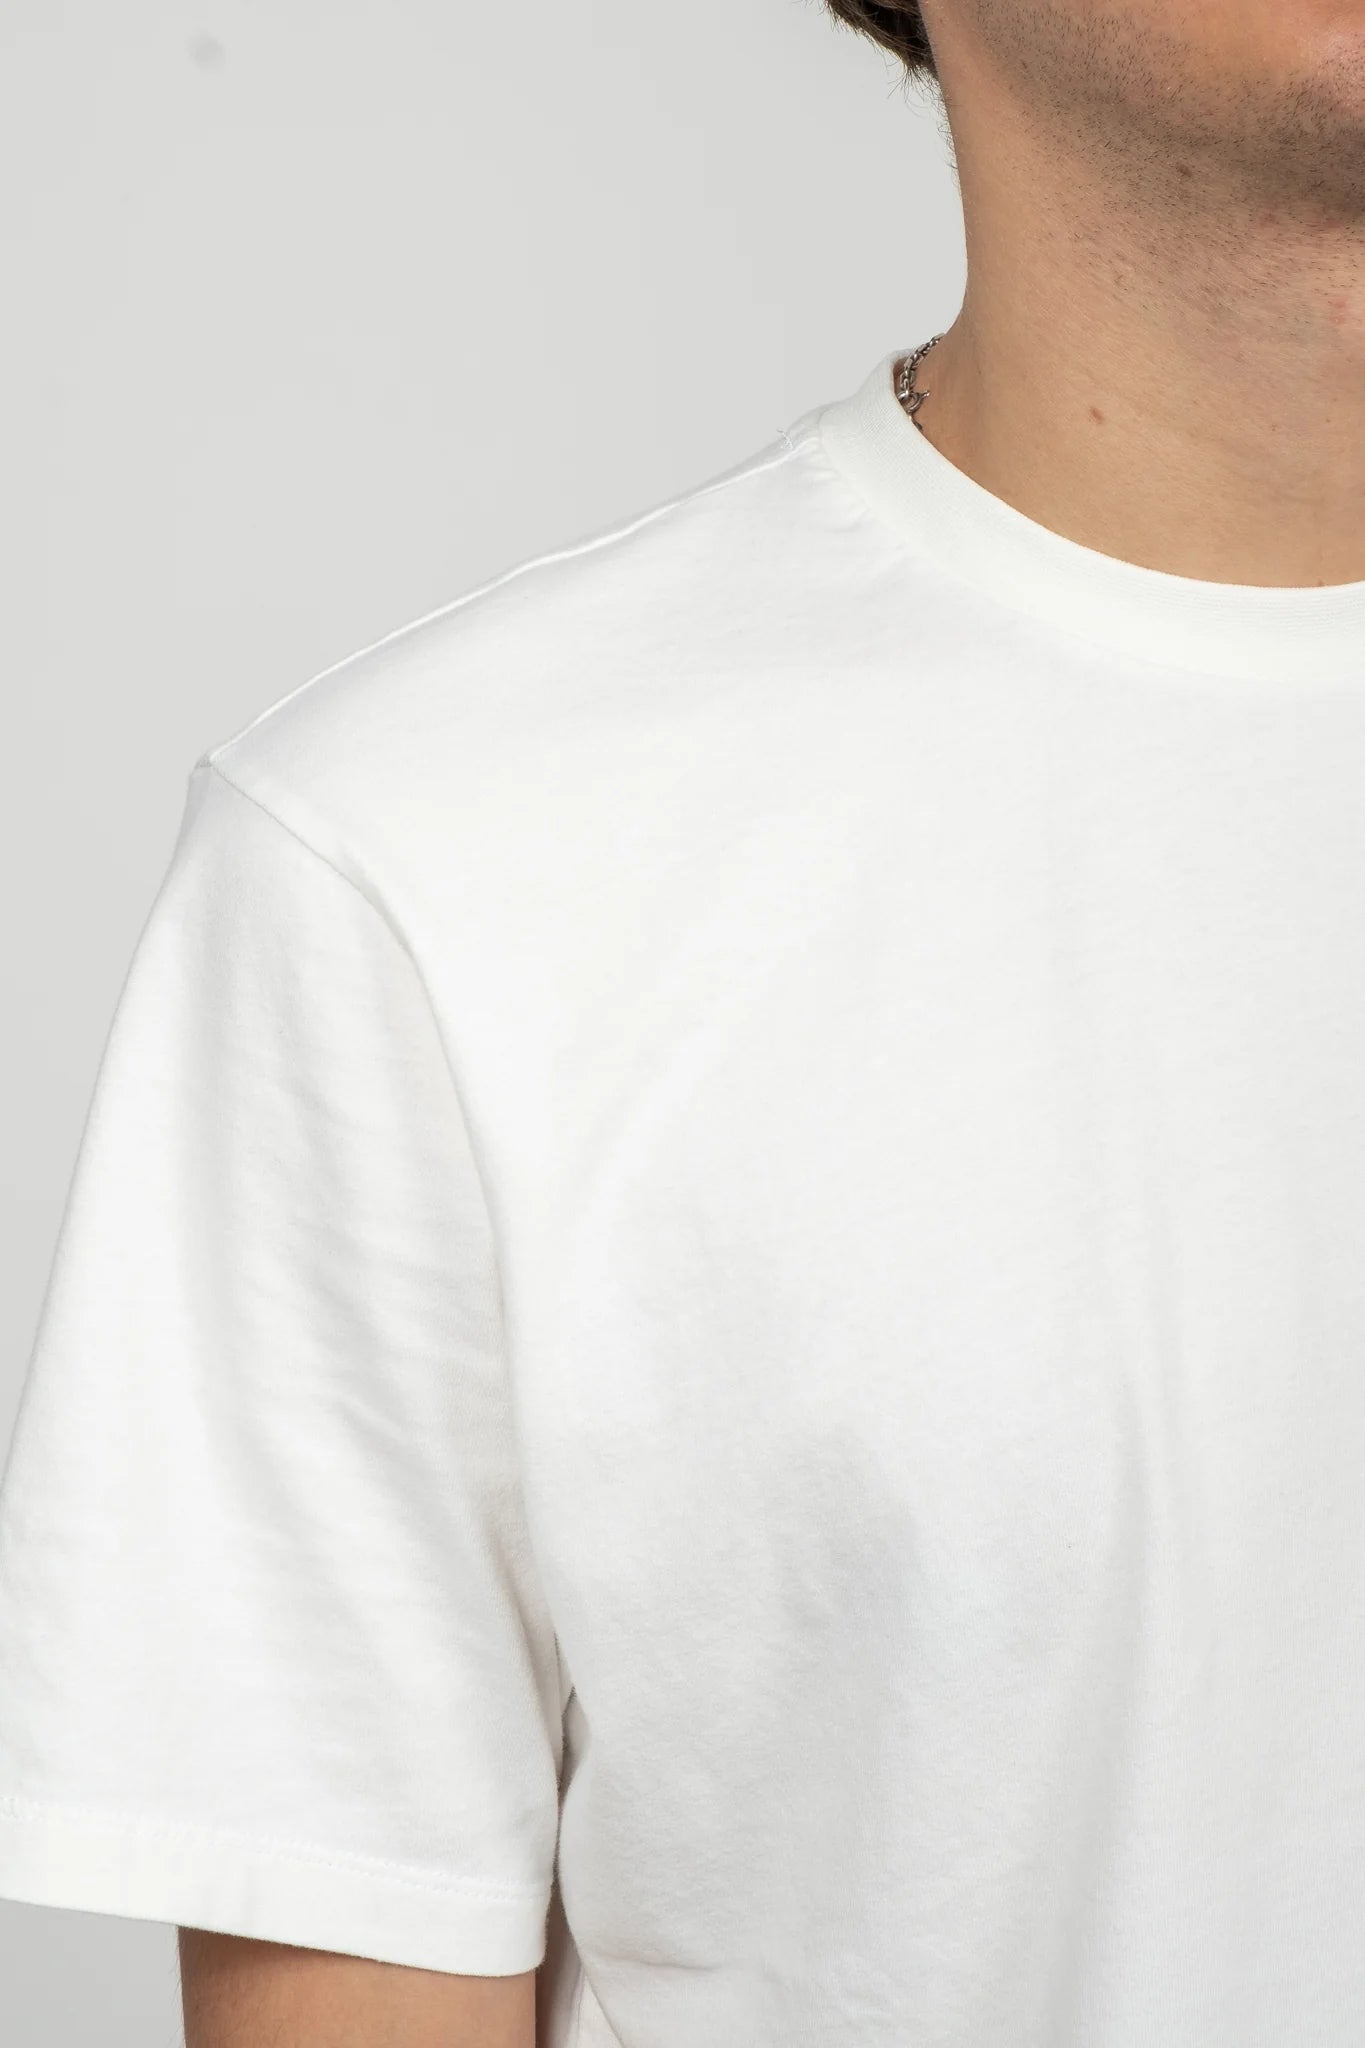 C.O.F. Studio Crewneck T-Shirt in white